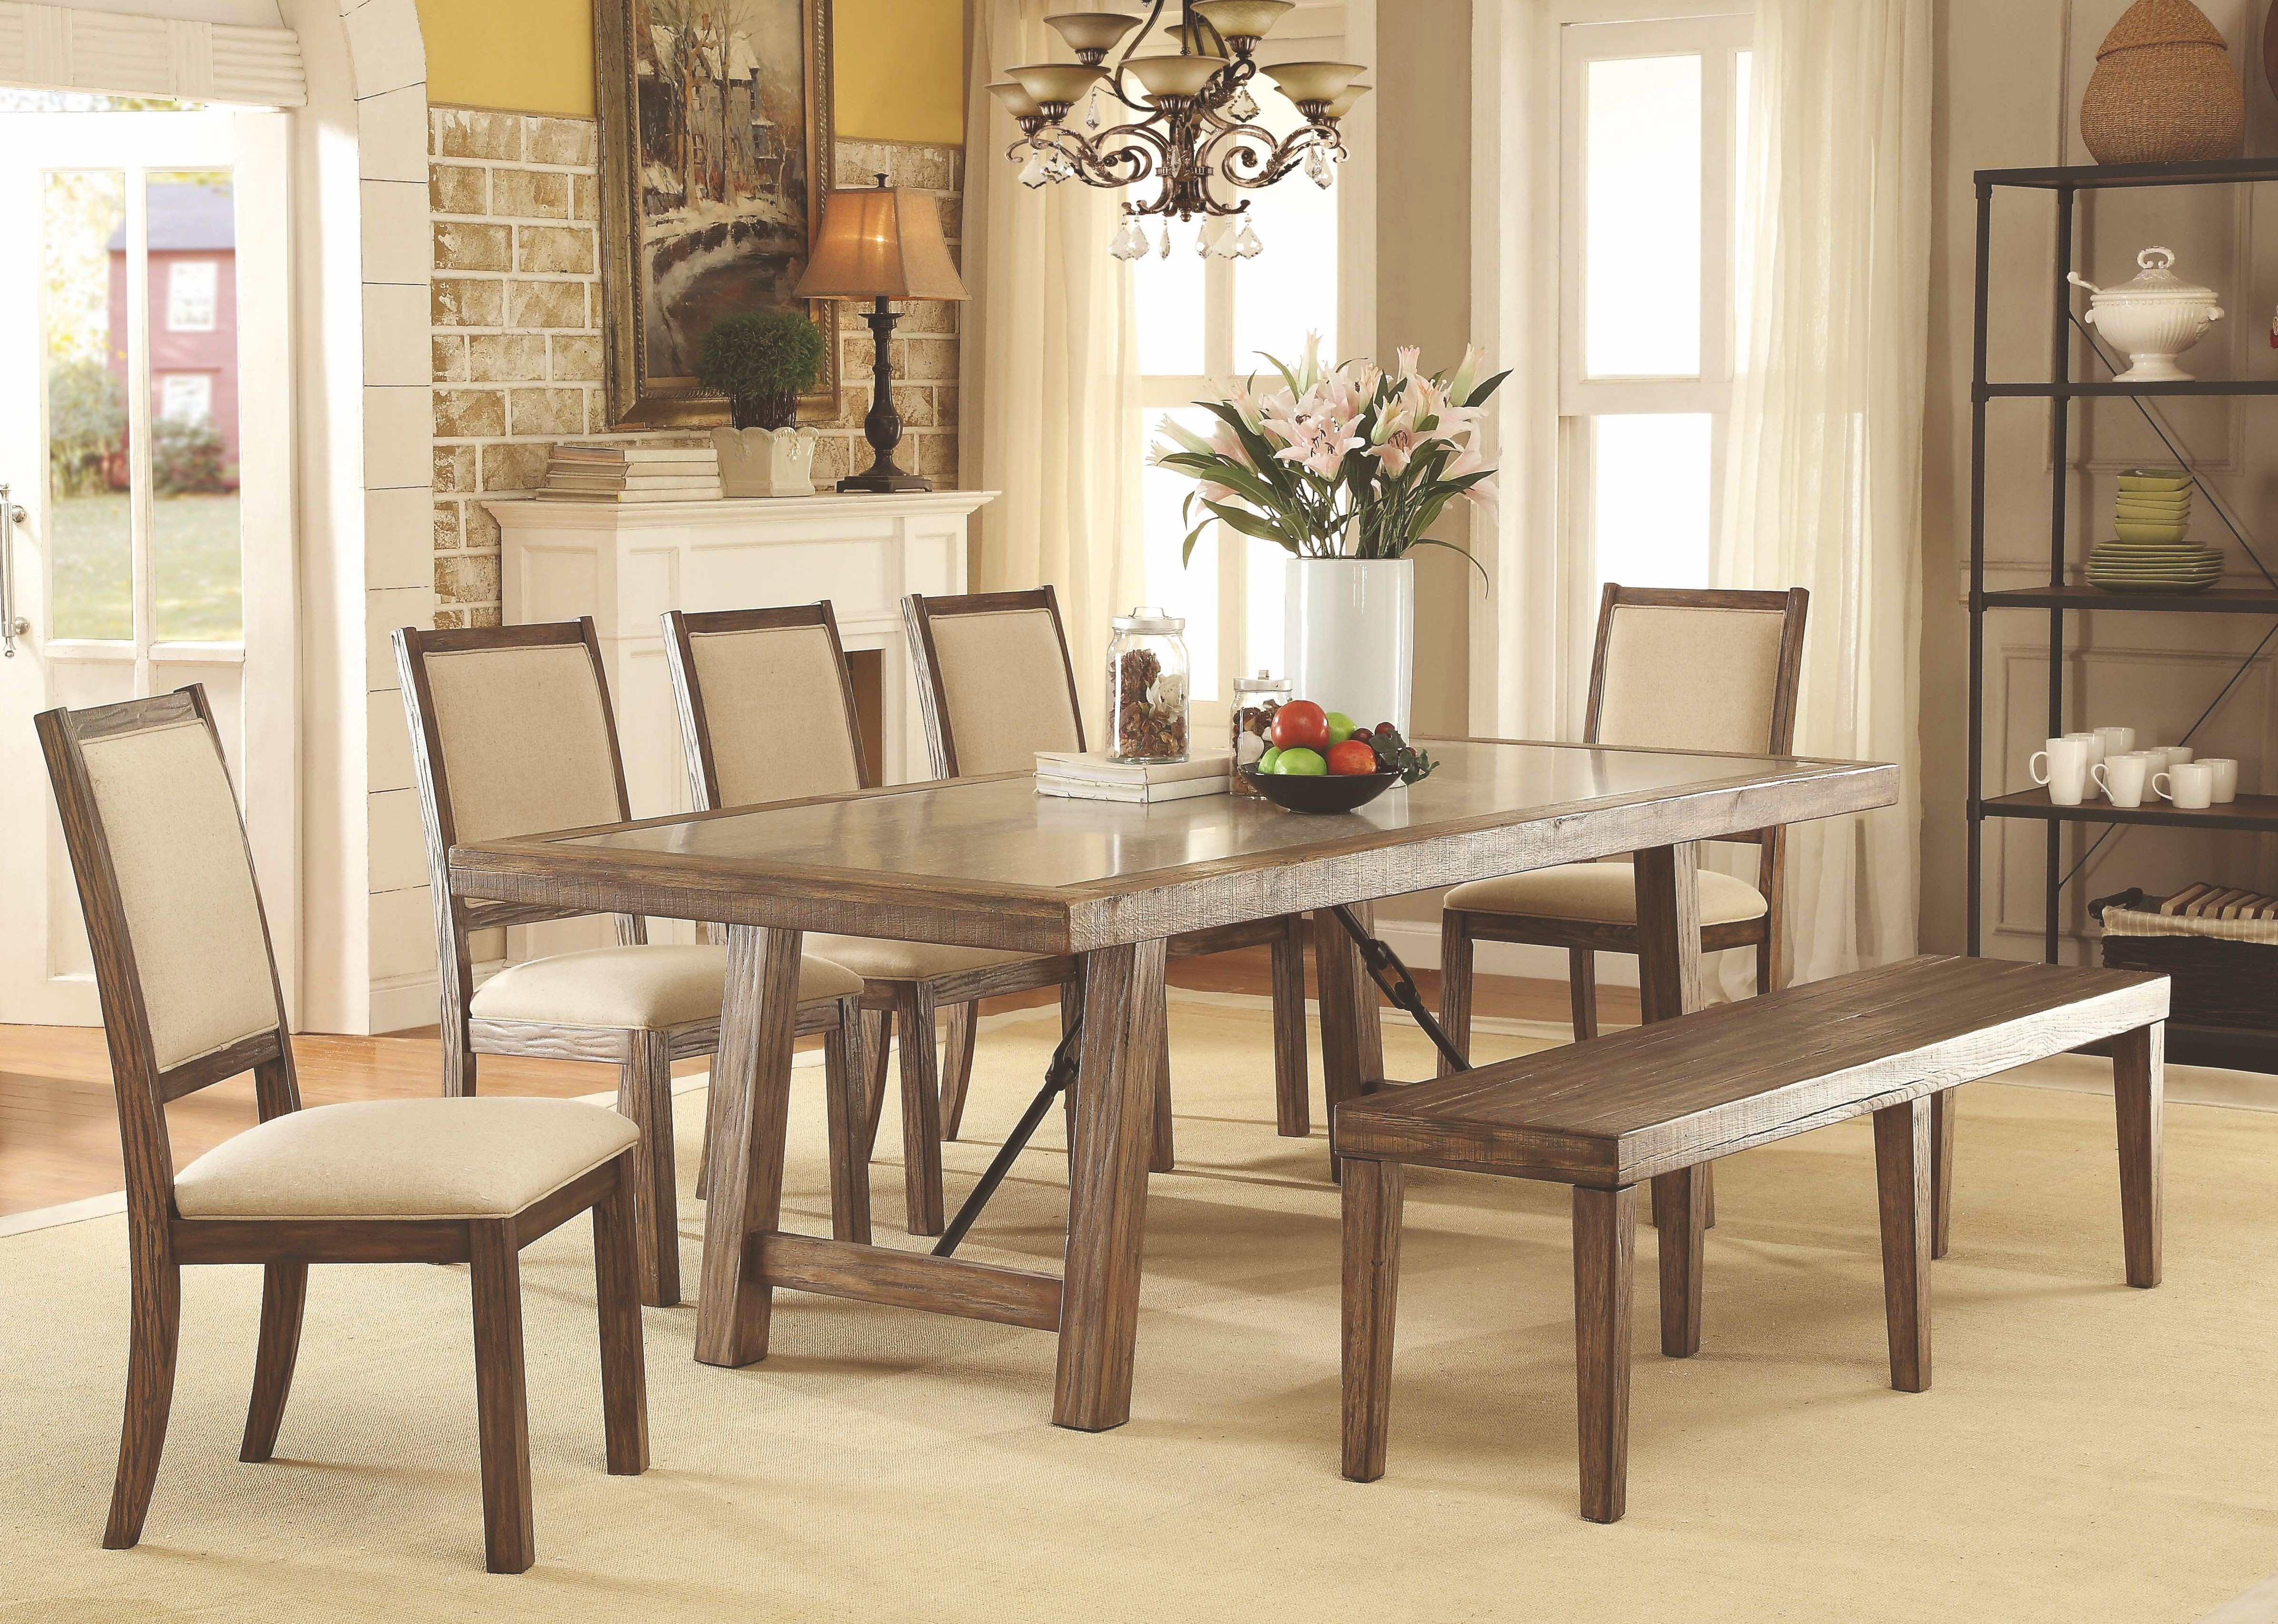 Best ideas about Oak Dining Room Set
. Save or Pin Colettte Rustic Oak Rectangular Dining Room Set CM3562T Now.